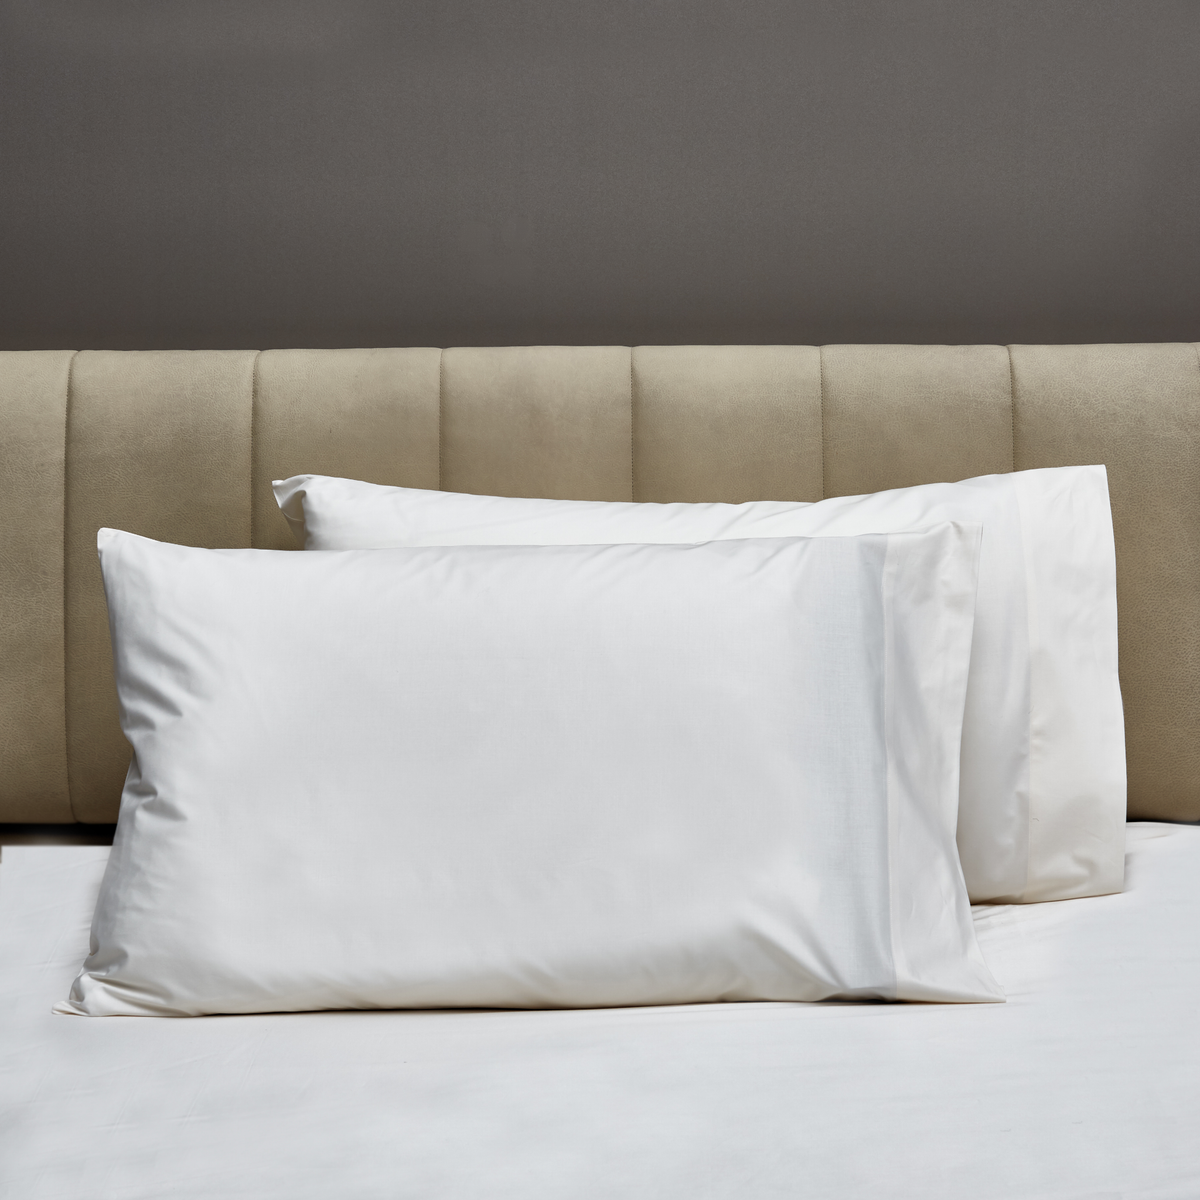 Pair of Pillowcases of Signoria Gemma Bedding in White Color